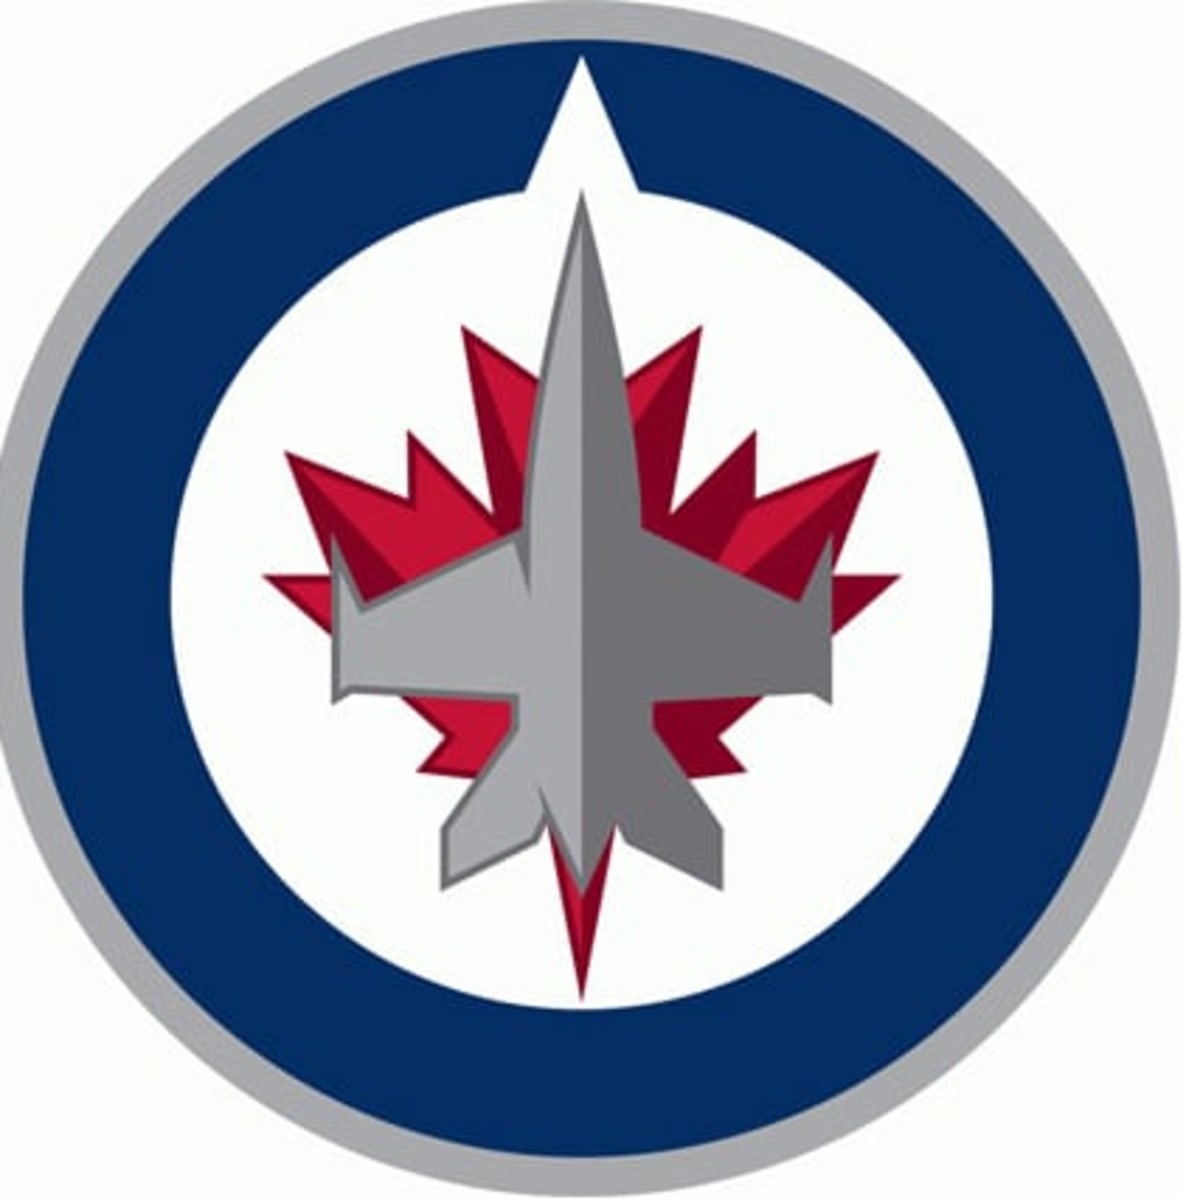 Edmonton Oilers Logos - National Hockey League (NHL) - Chris Creamer's  Sports Logos Page 